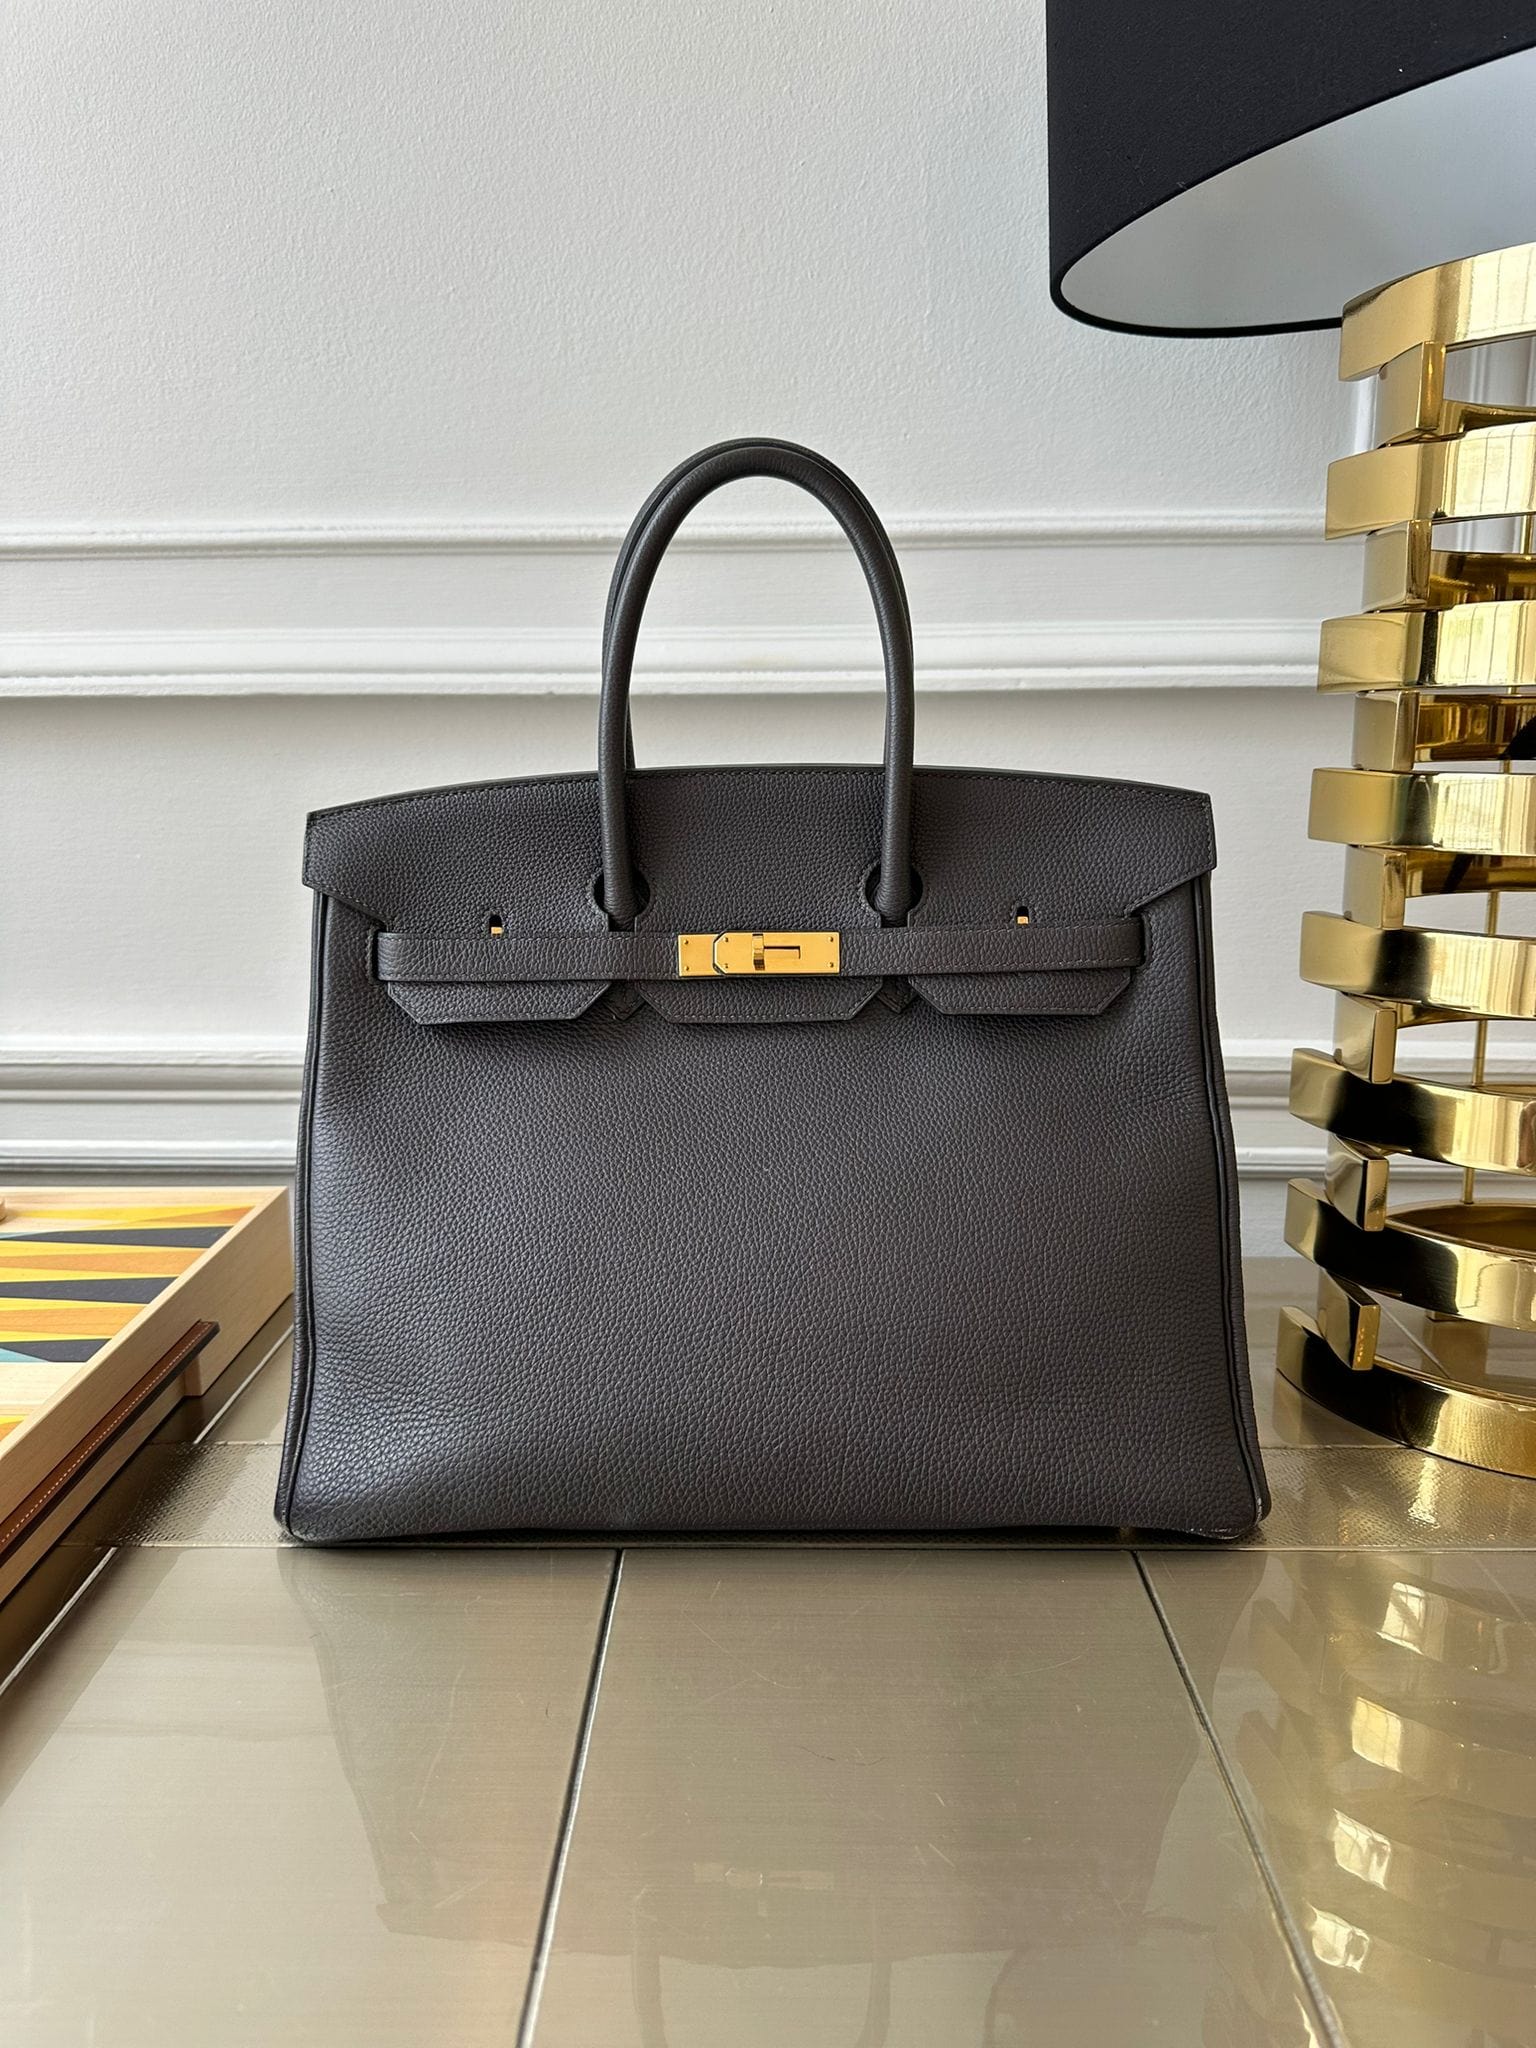 Hermès PRELOVED HERMÈS BIRKIN 35CM GRAPHITE Togo Leather with Gold Hardware